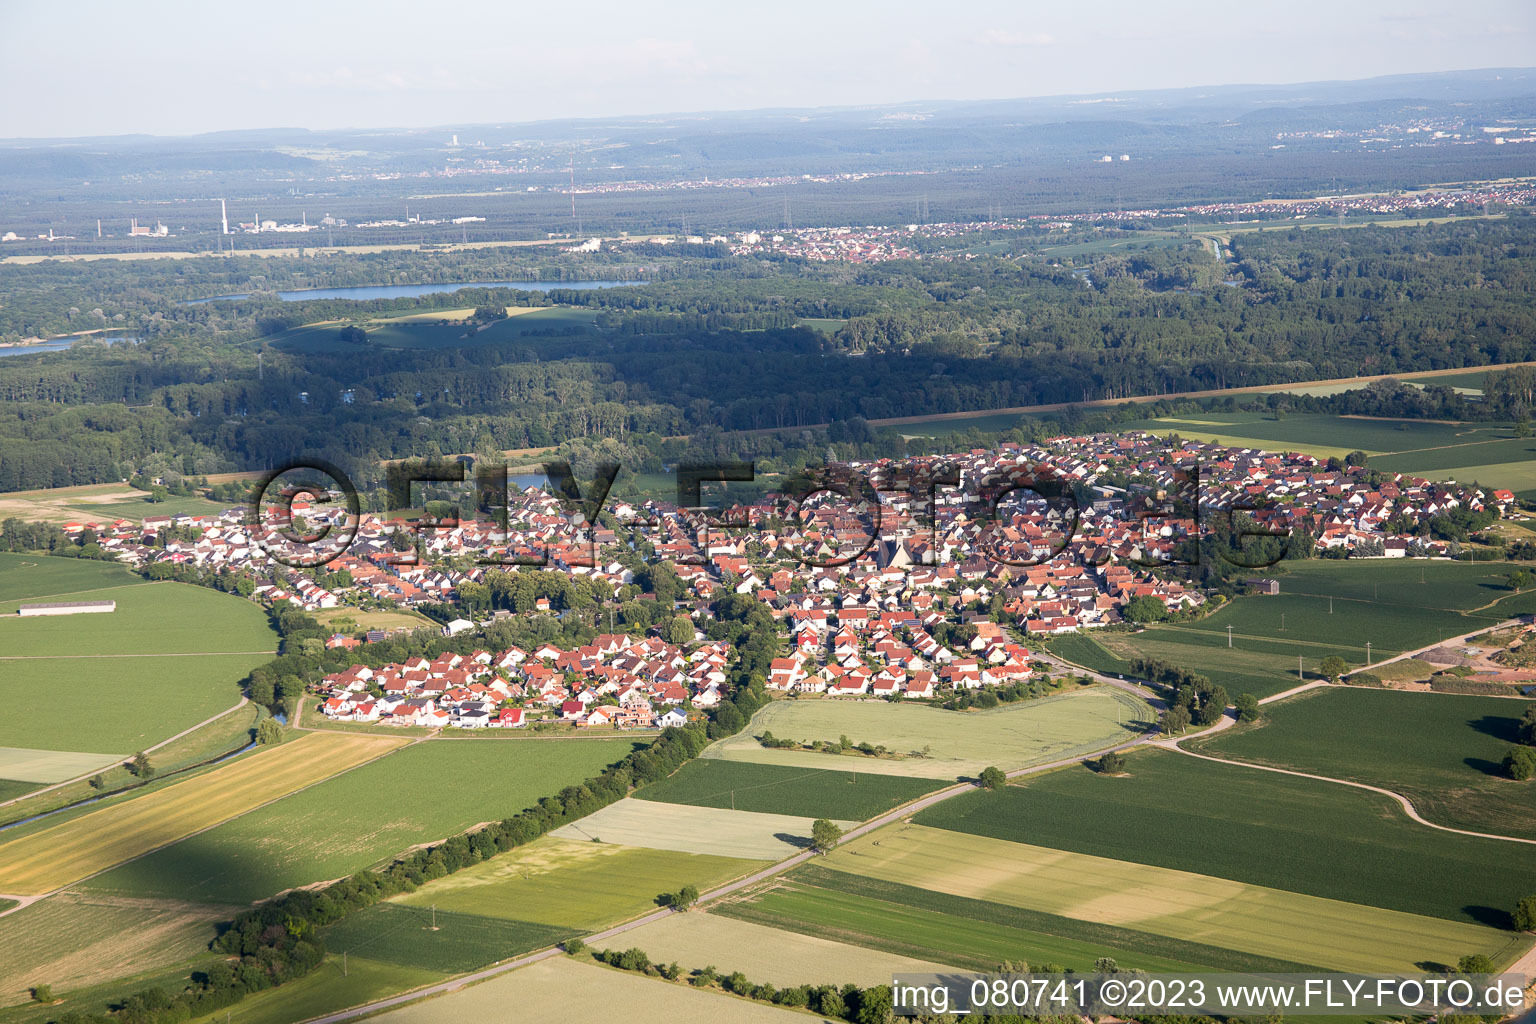 Leimersheim in the state Rhineland-Palatinate, Germany